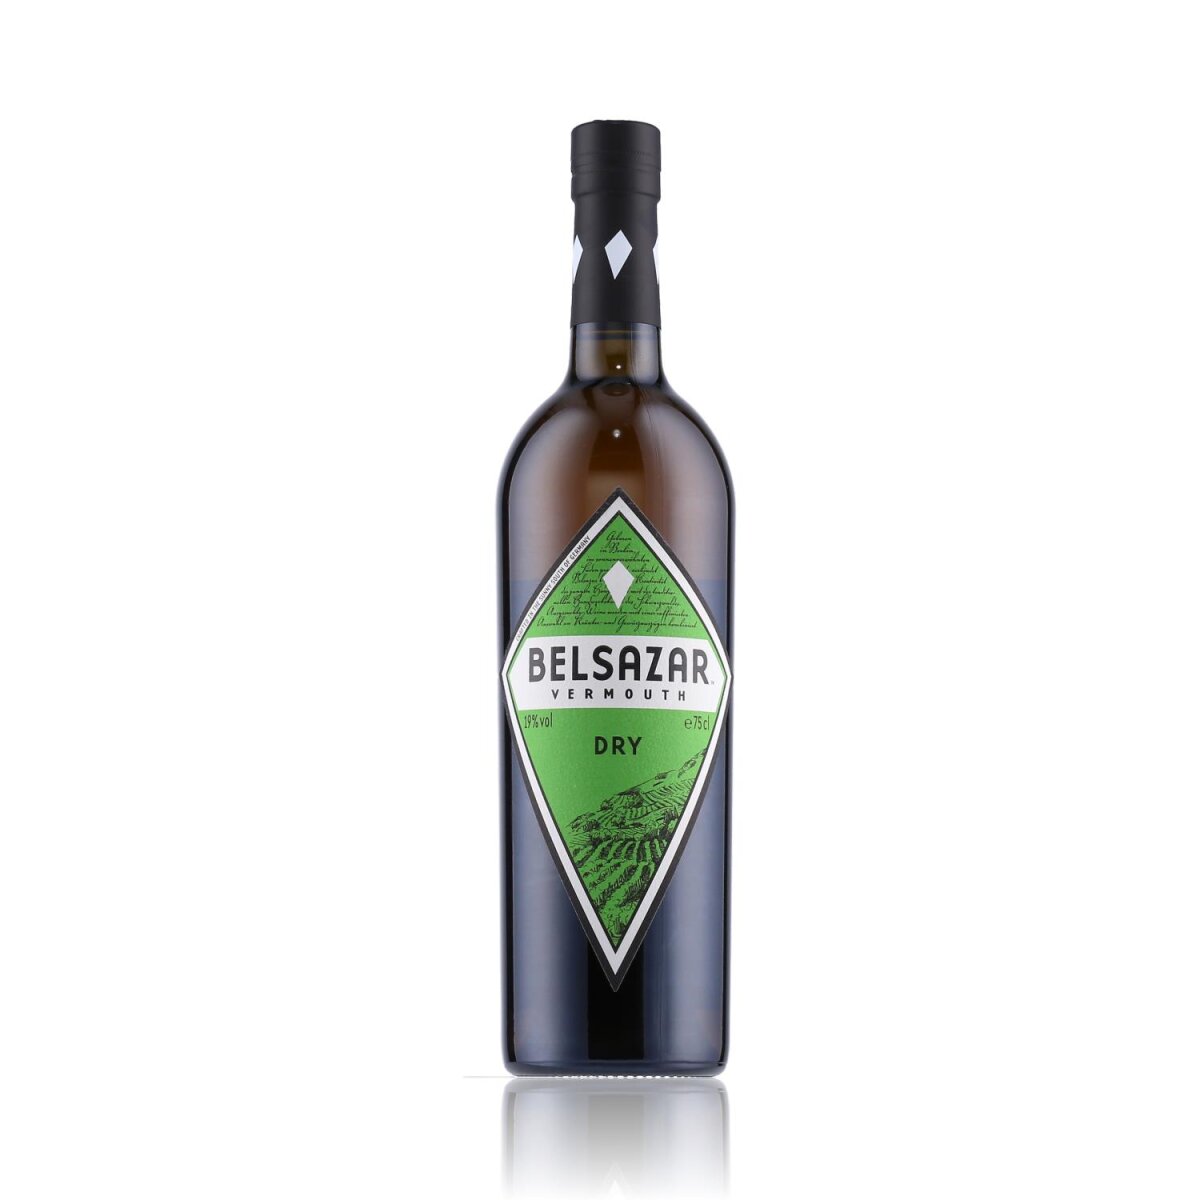 Belsazar Dry Vermouth Vol. 16,89 € 19% 0,75l